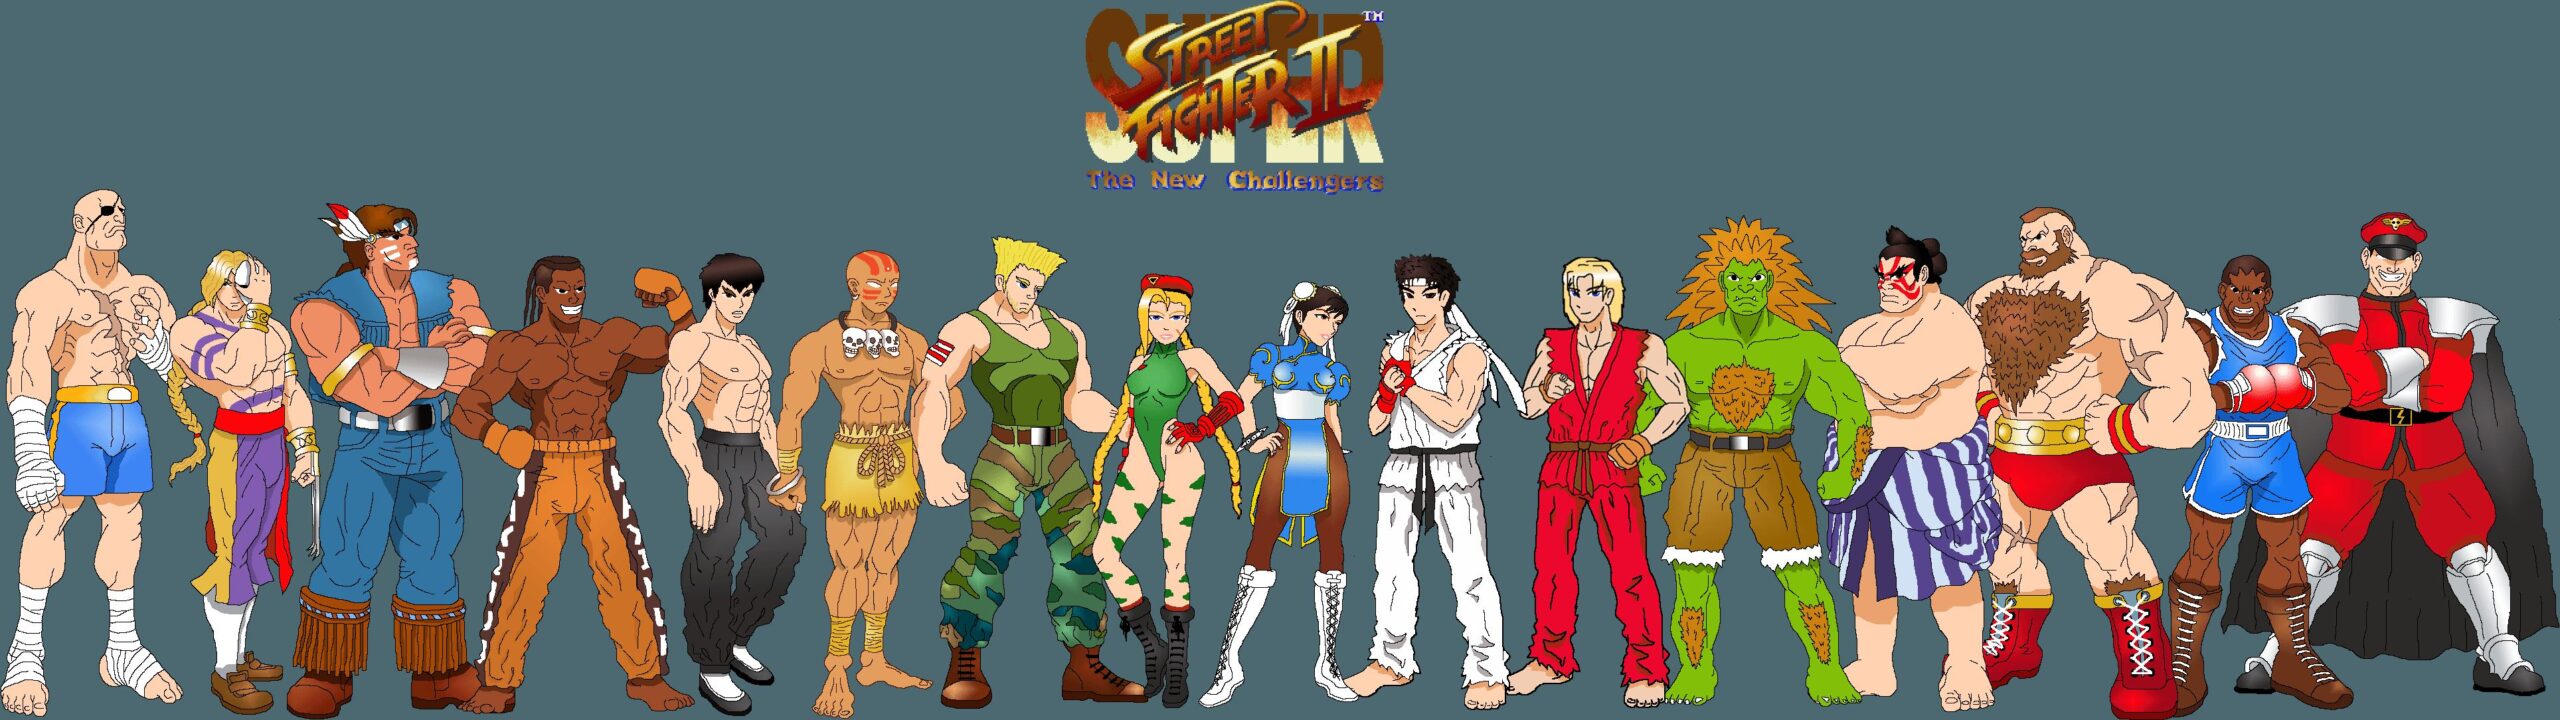 Street Fighter II Wallpaper Desktop 4k, Street Fighter II, Game